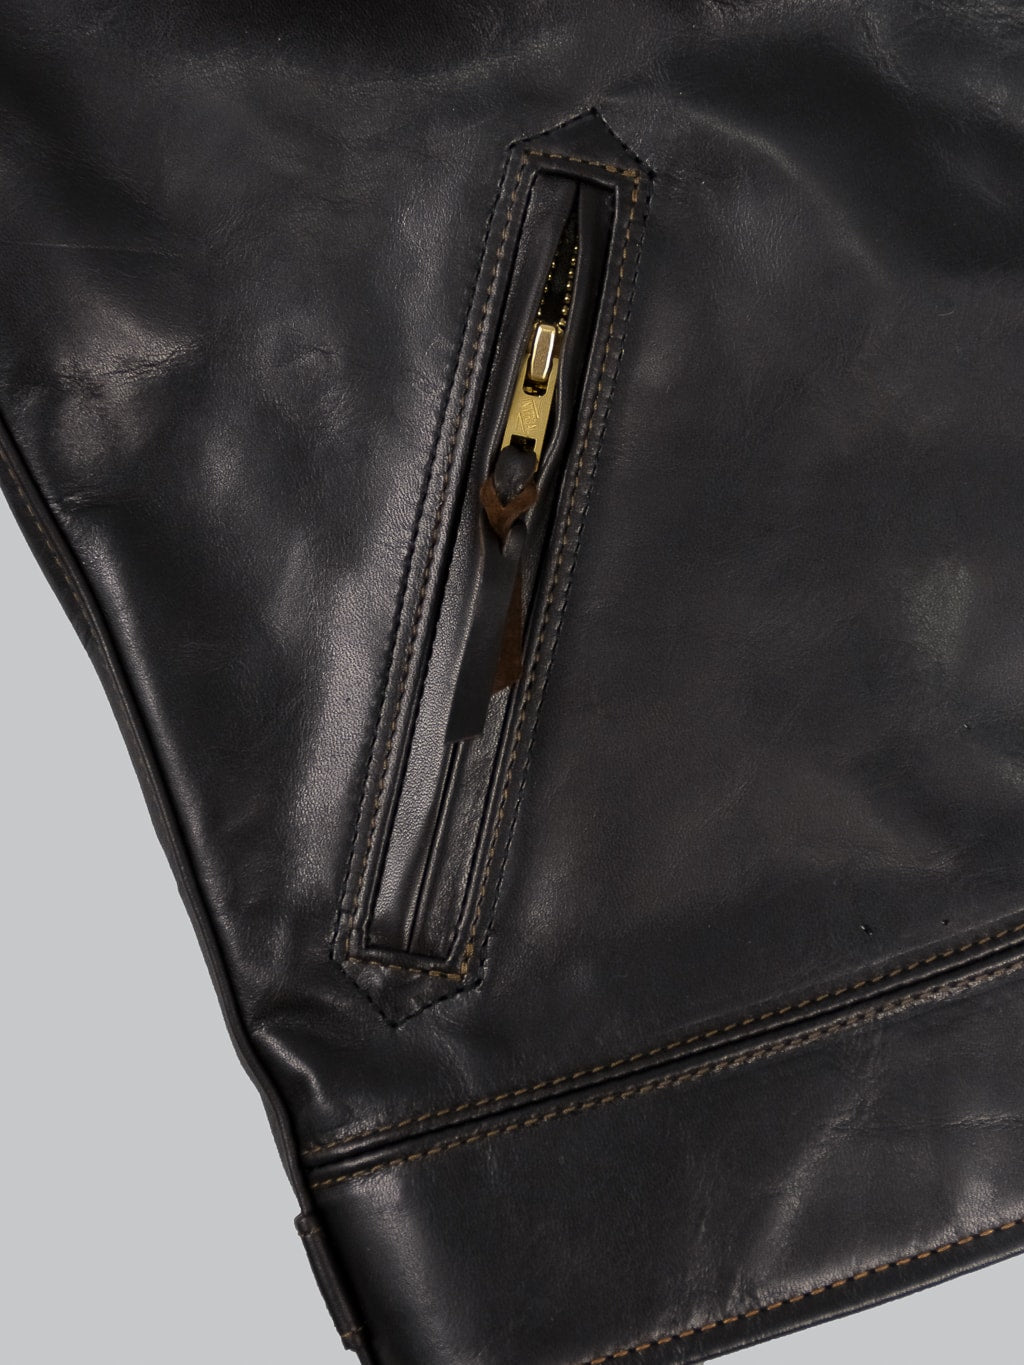 The Flat Head Horsehide Single Riders Jacket Black side pocket leather strap